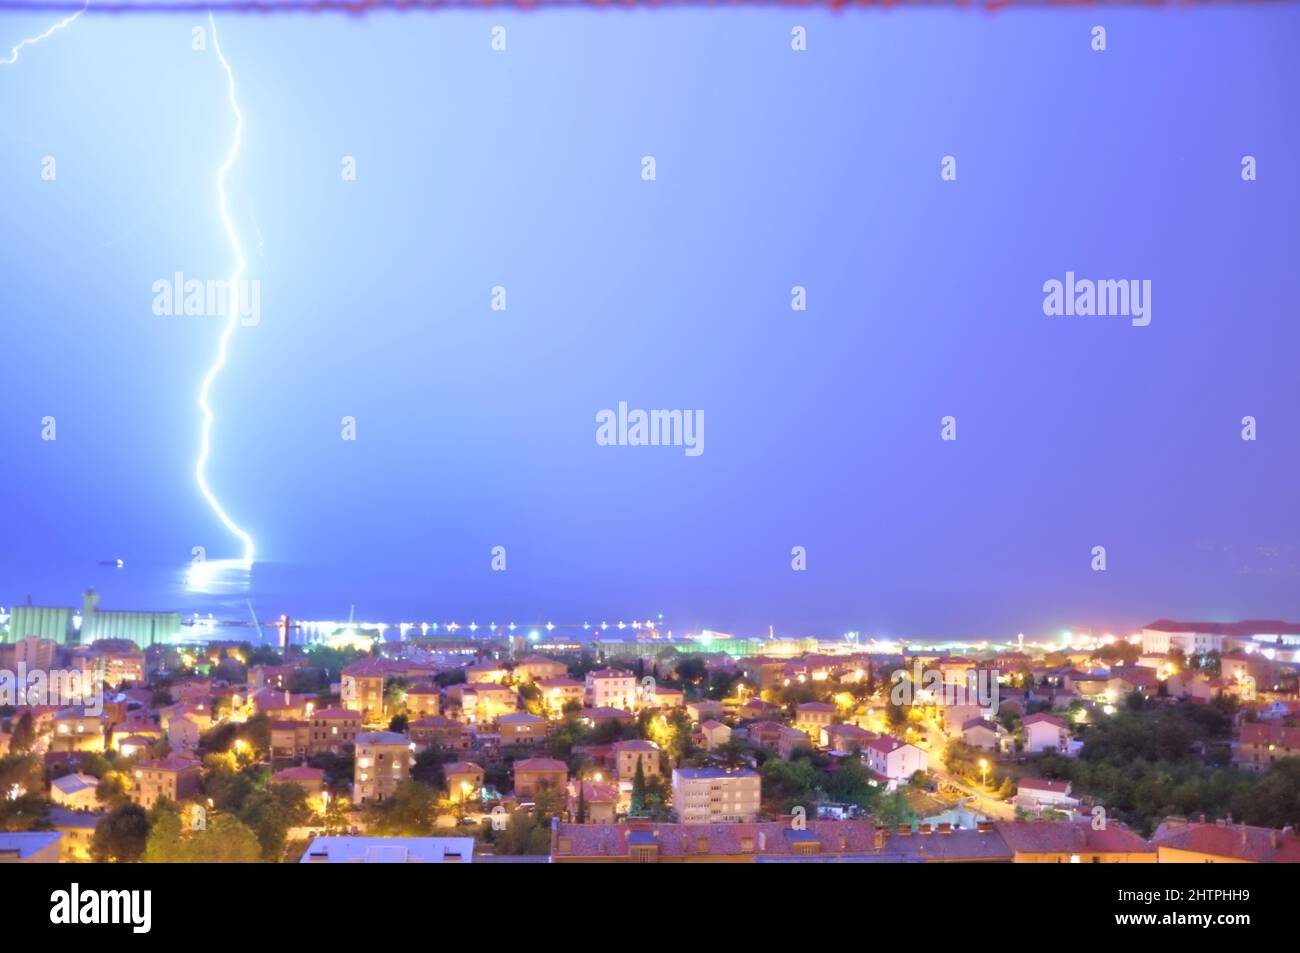 Nig storm with one lightening bolt hitting Adriatic sea in Rijeka bay, Croatia. Spectacular lightning bolts over a calm sea bay. Stock Photo